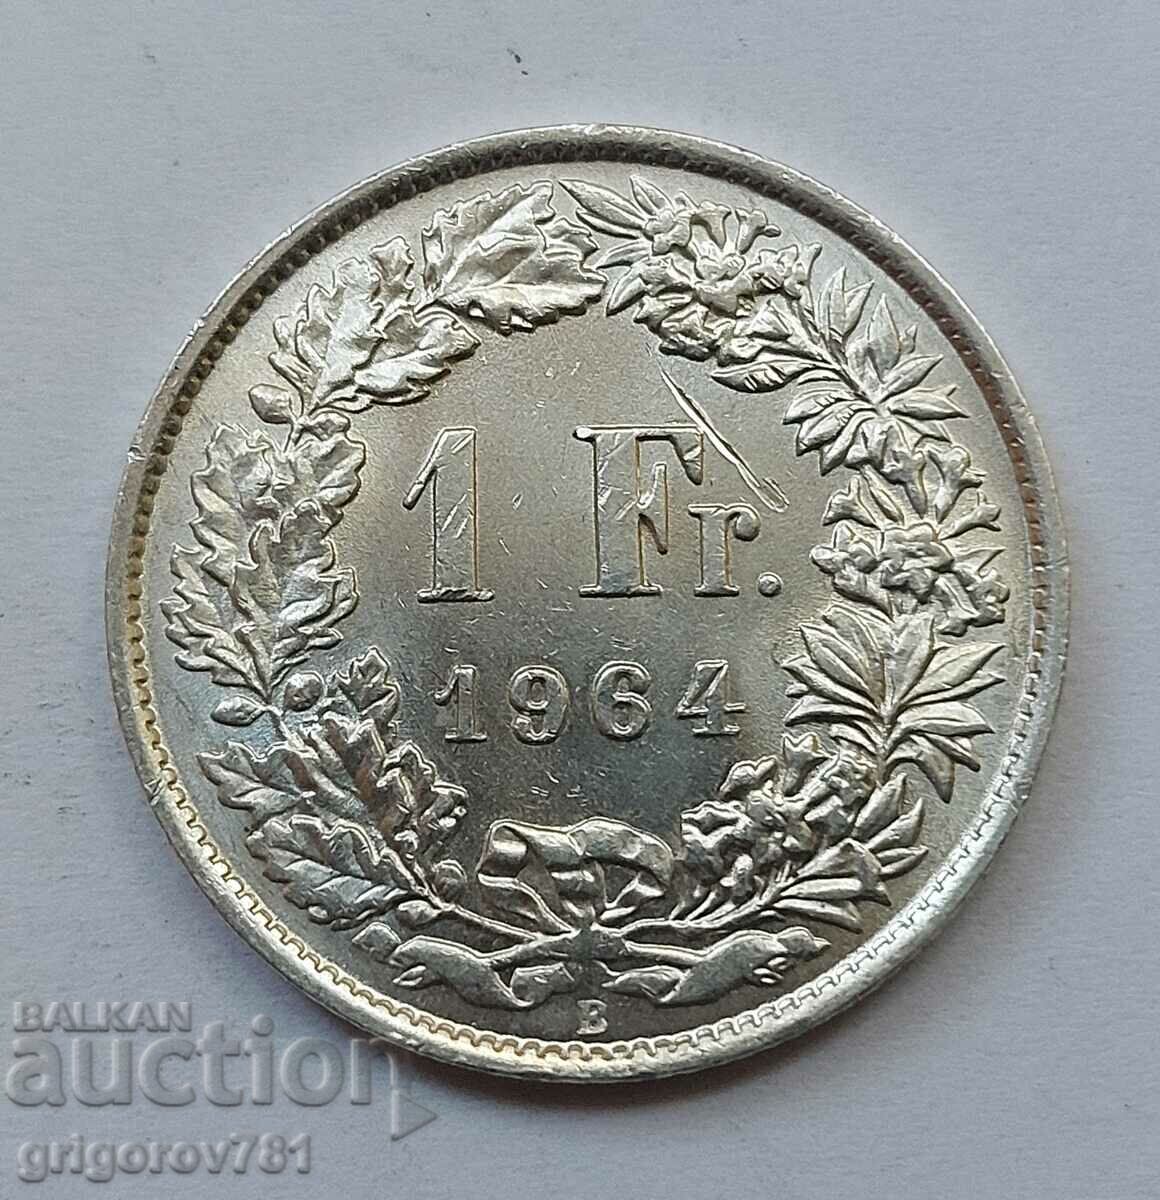 1 Franc Silver Switzerland 1964 B - Silver Coin #6